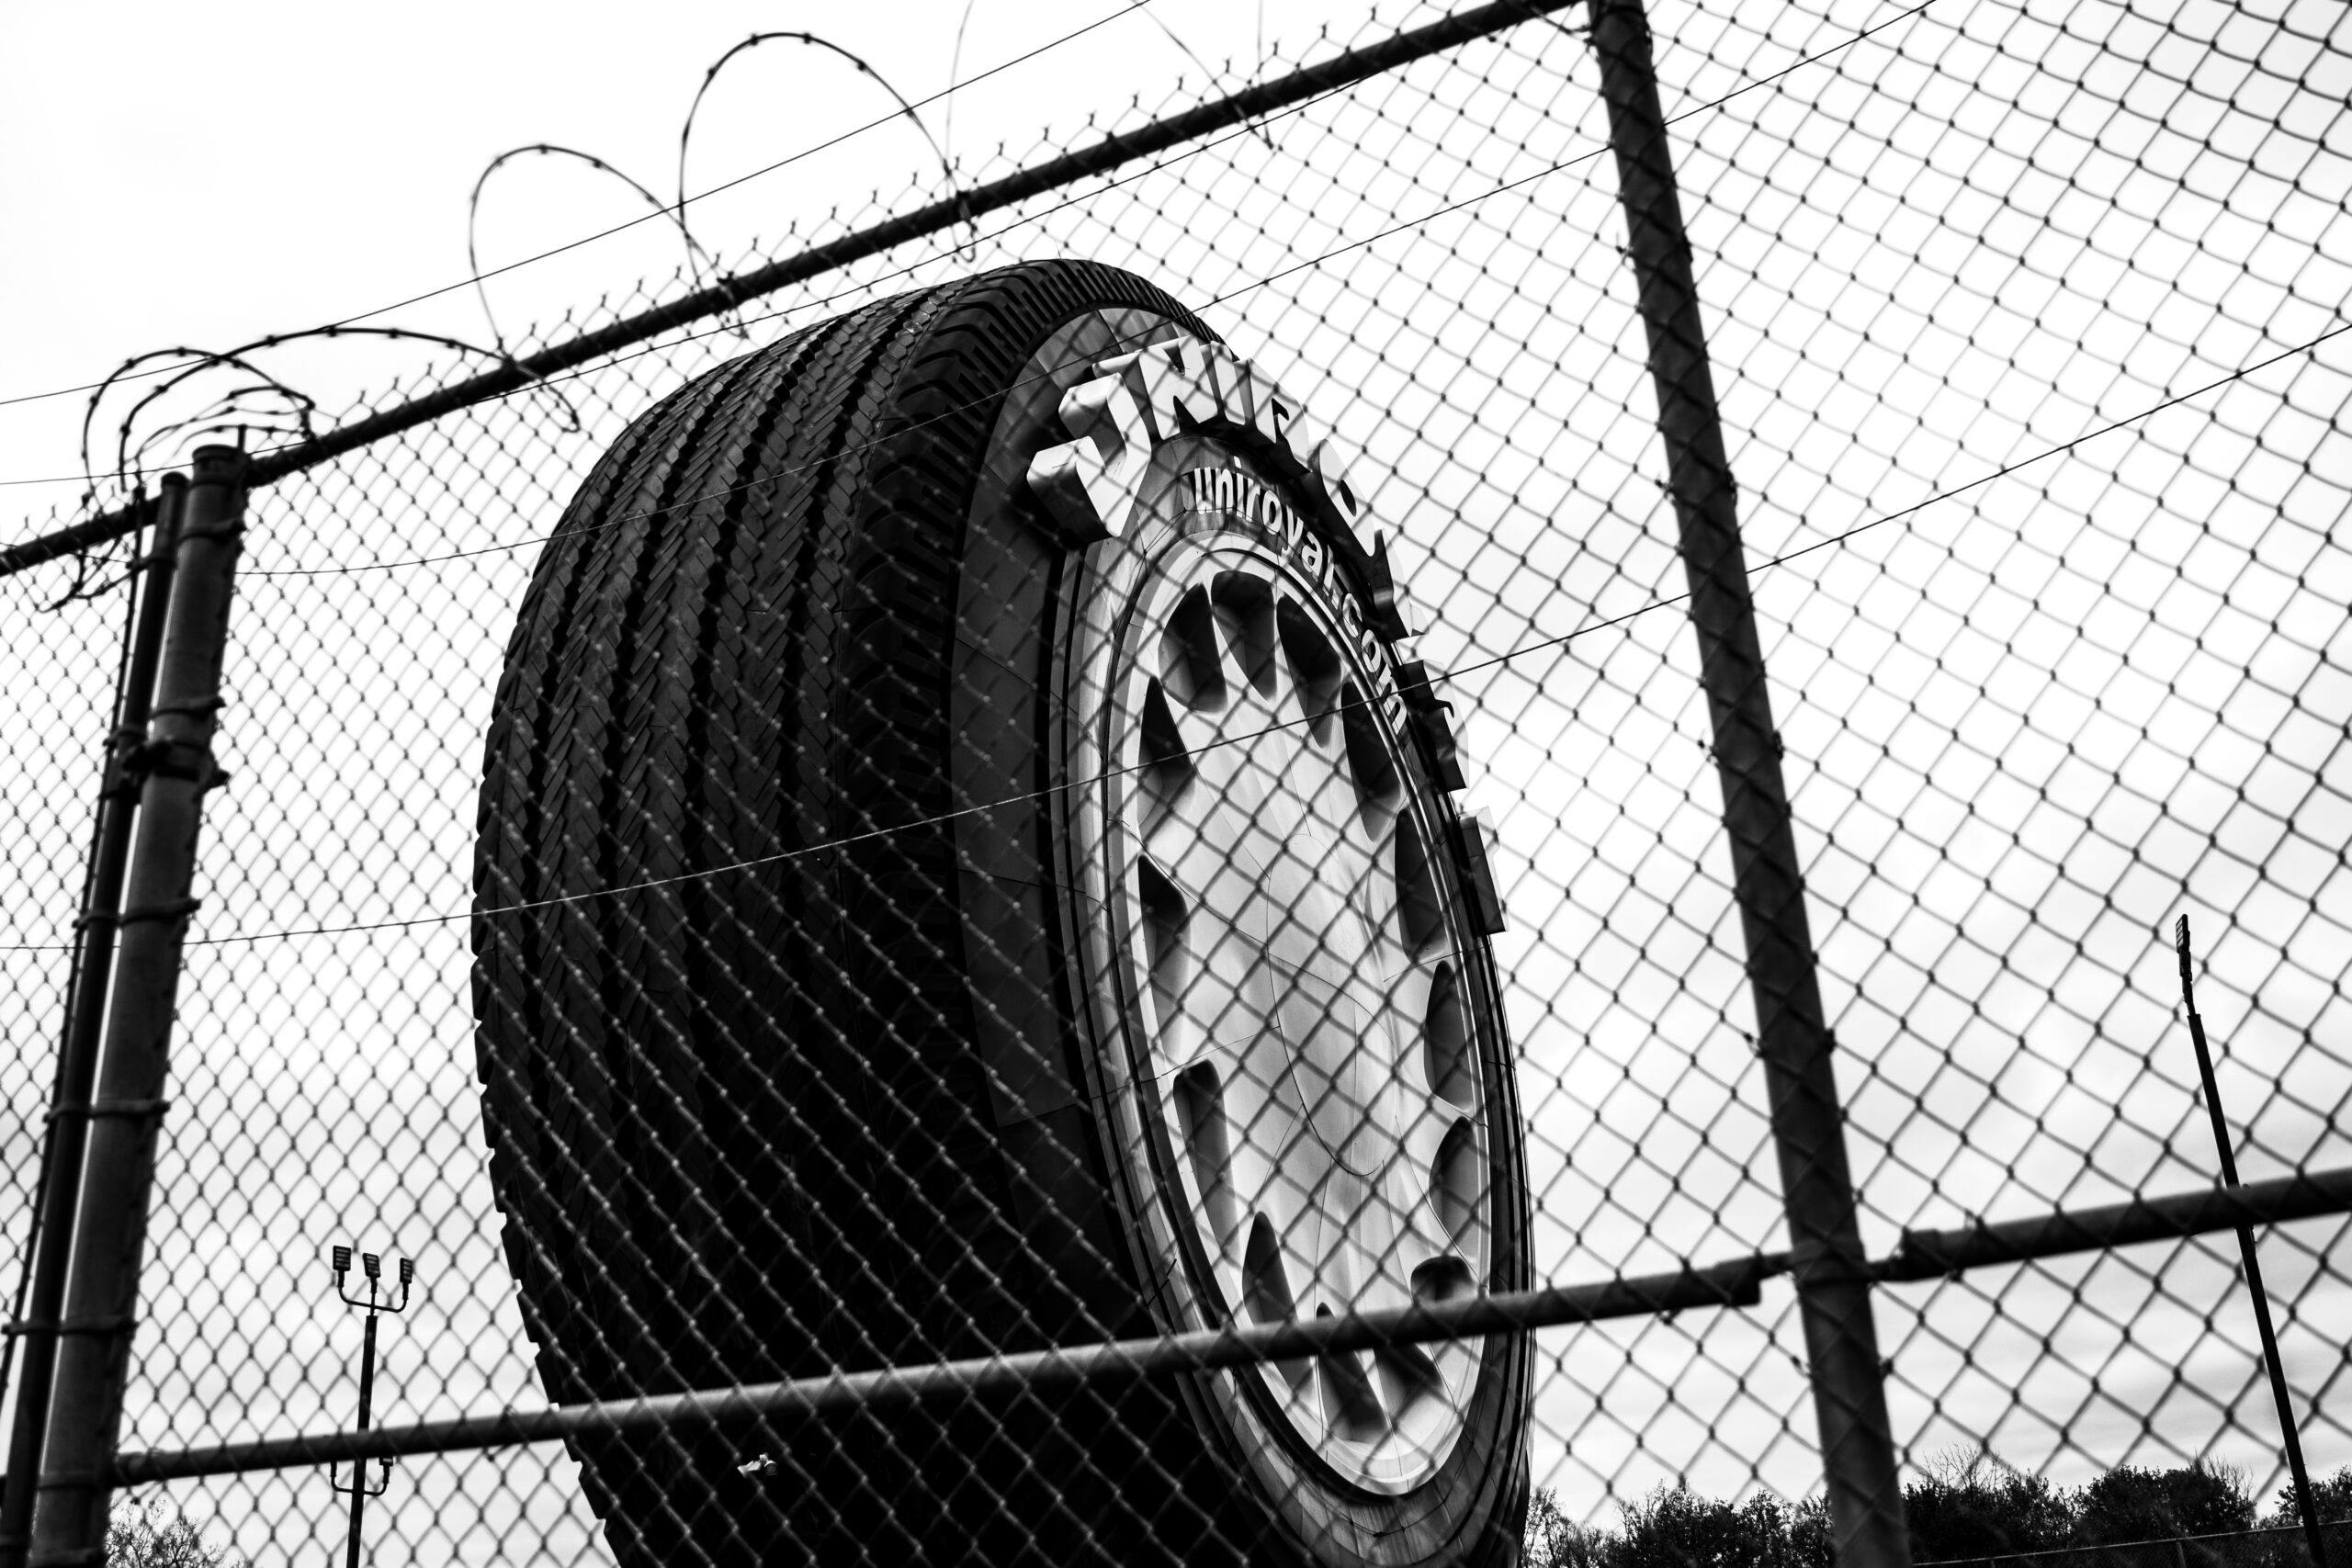 Uniroyal Tire Statue Detroit Michigan through fence